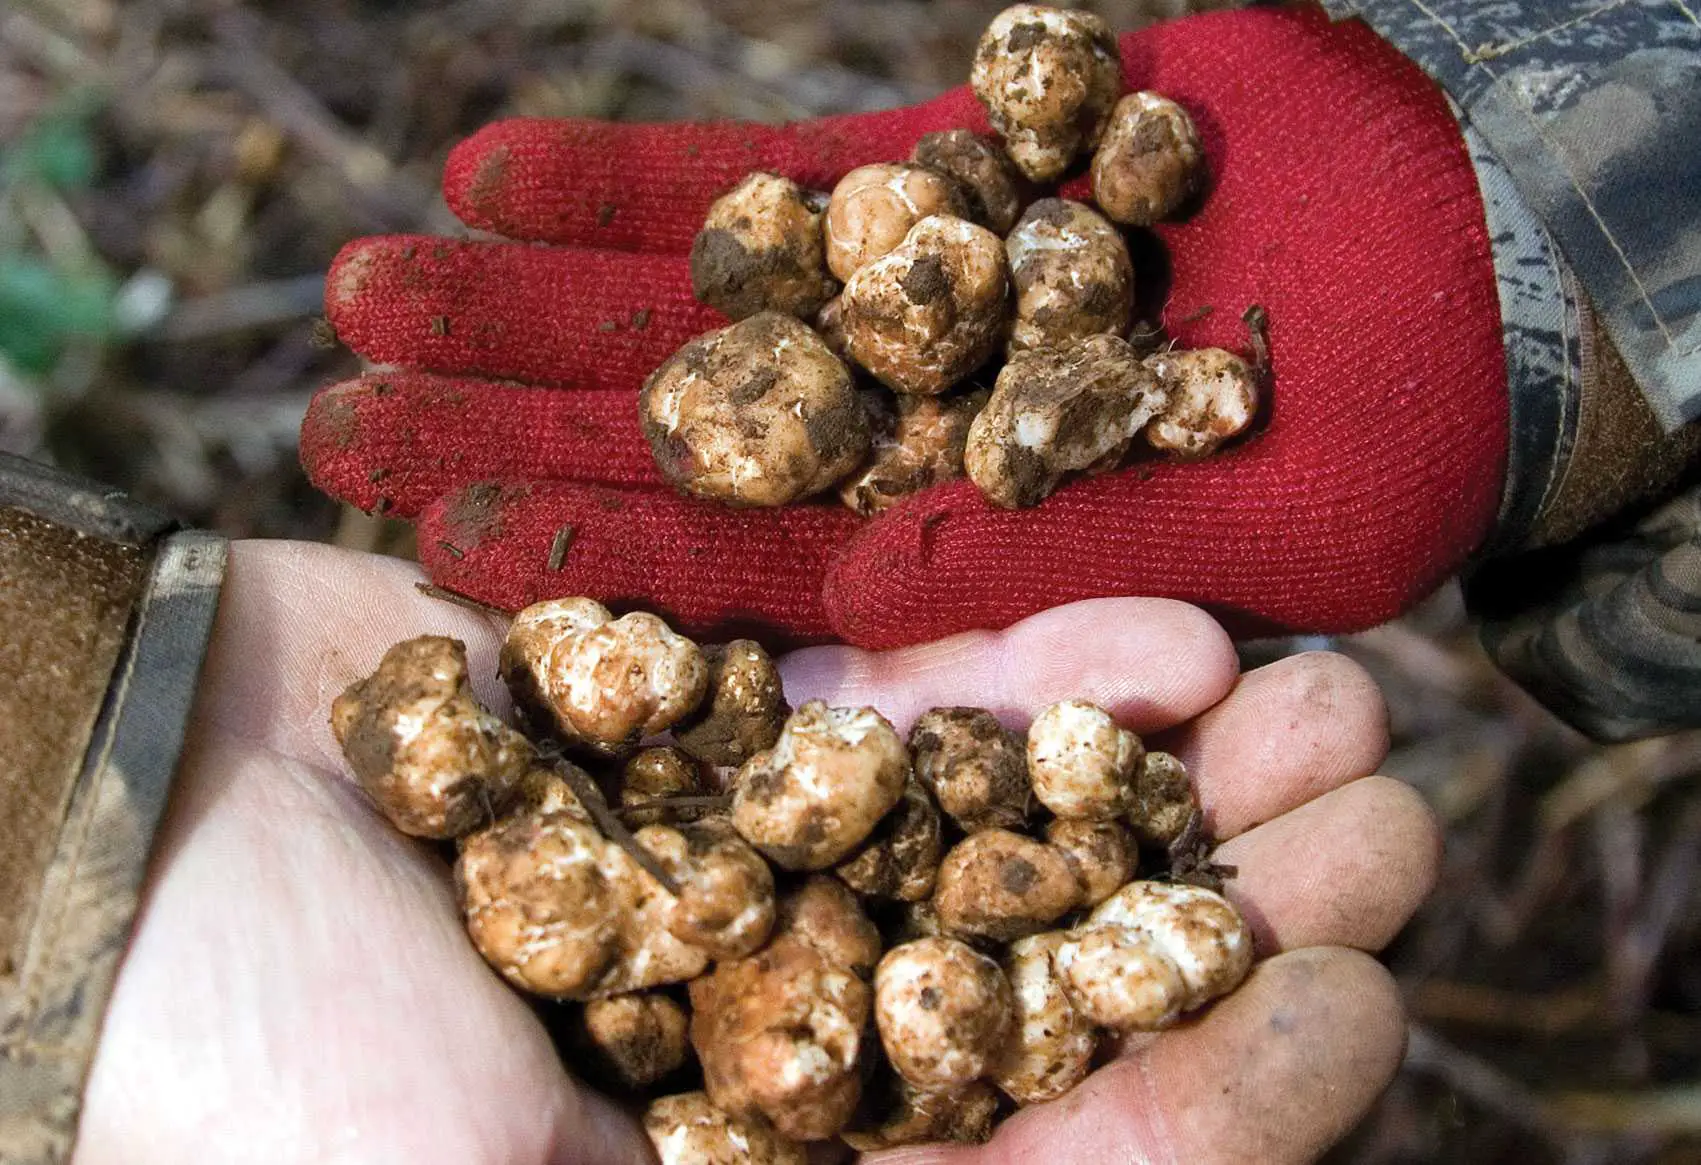 where do truffles come from